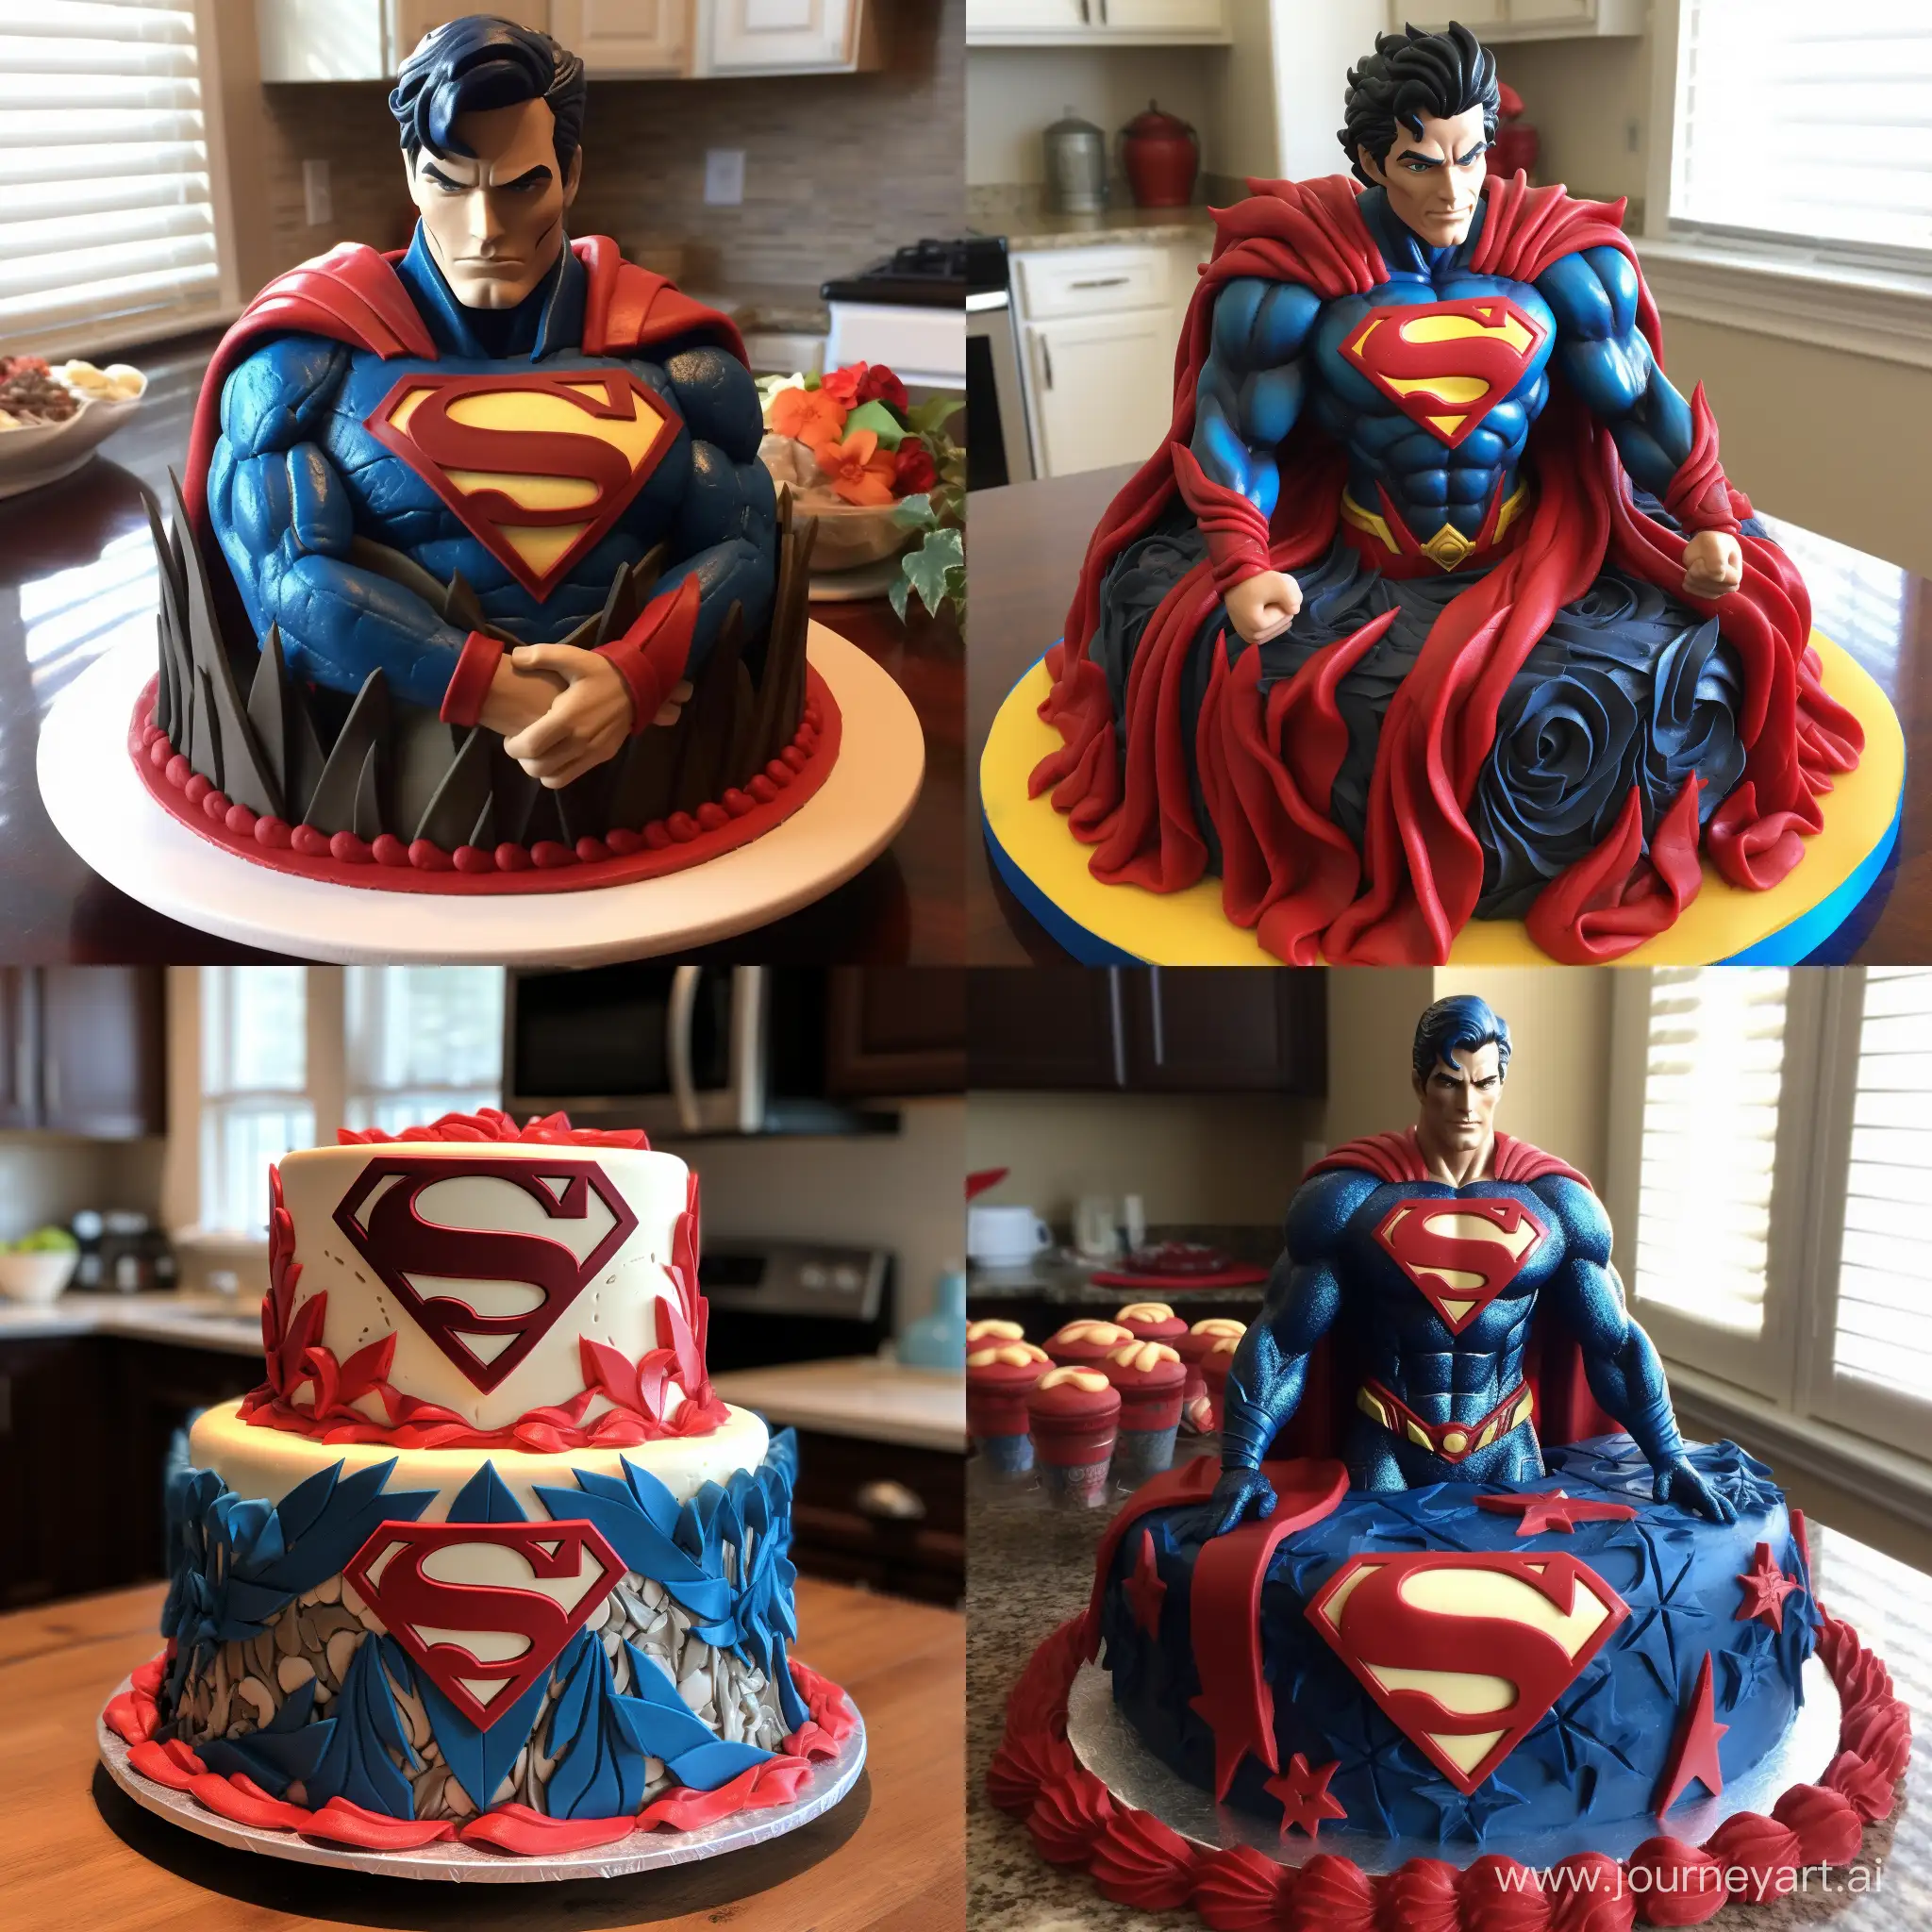 SupermanThemed-Birthday-Cake-Celebration